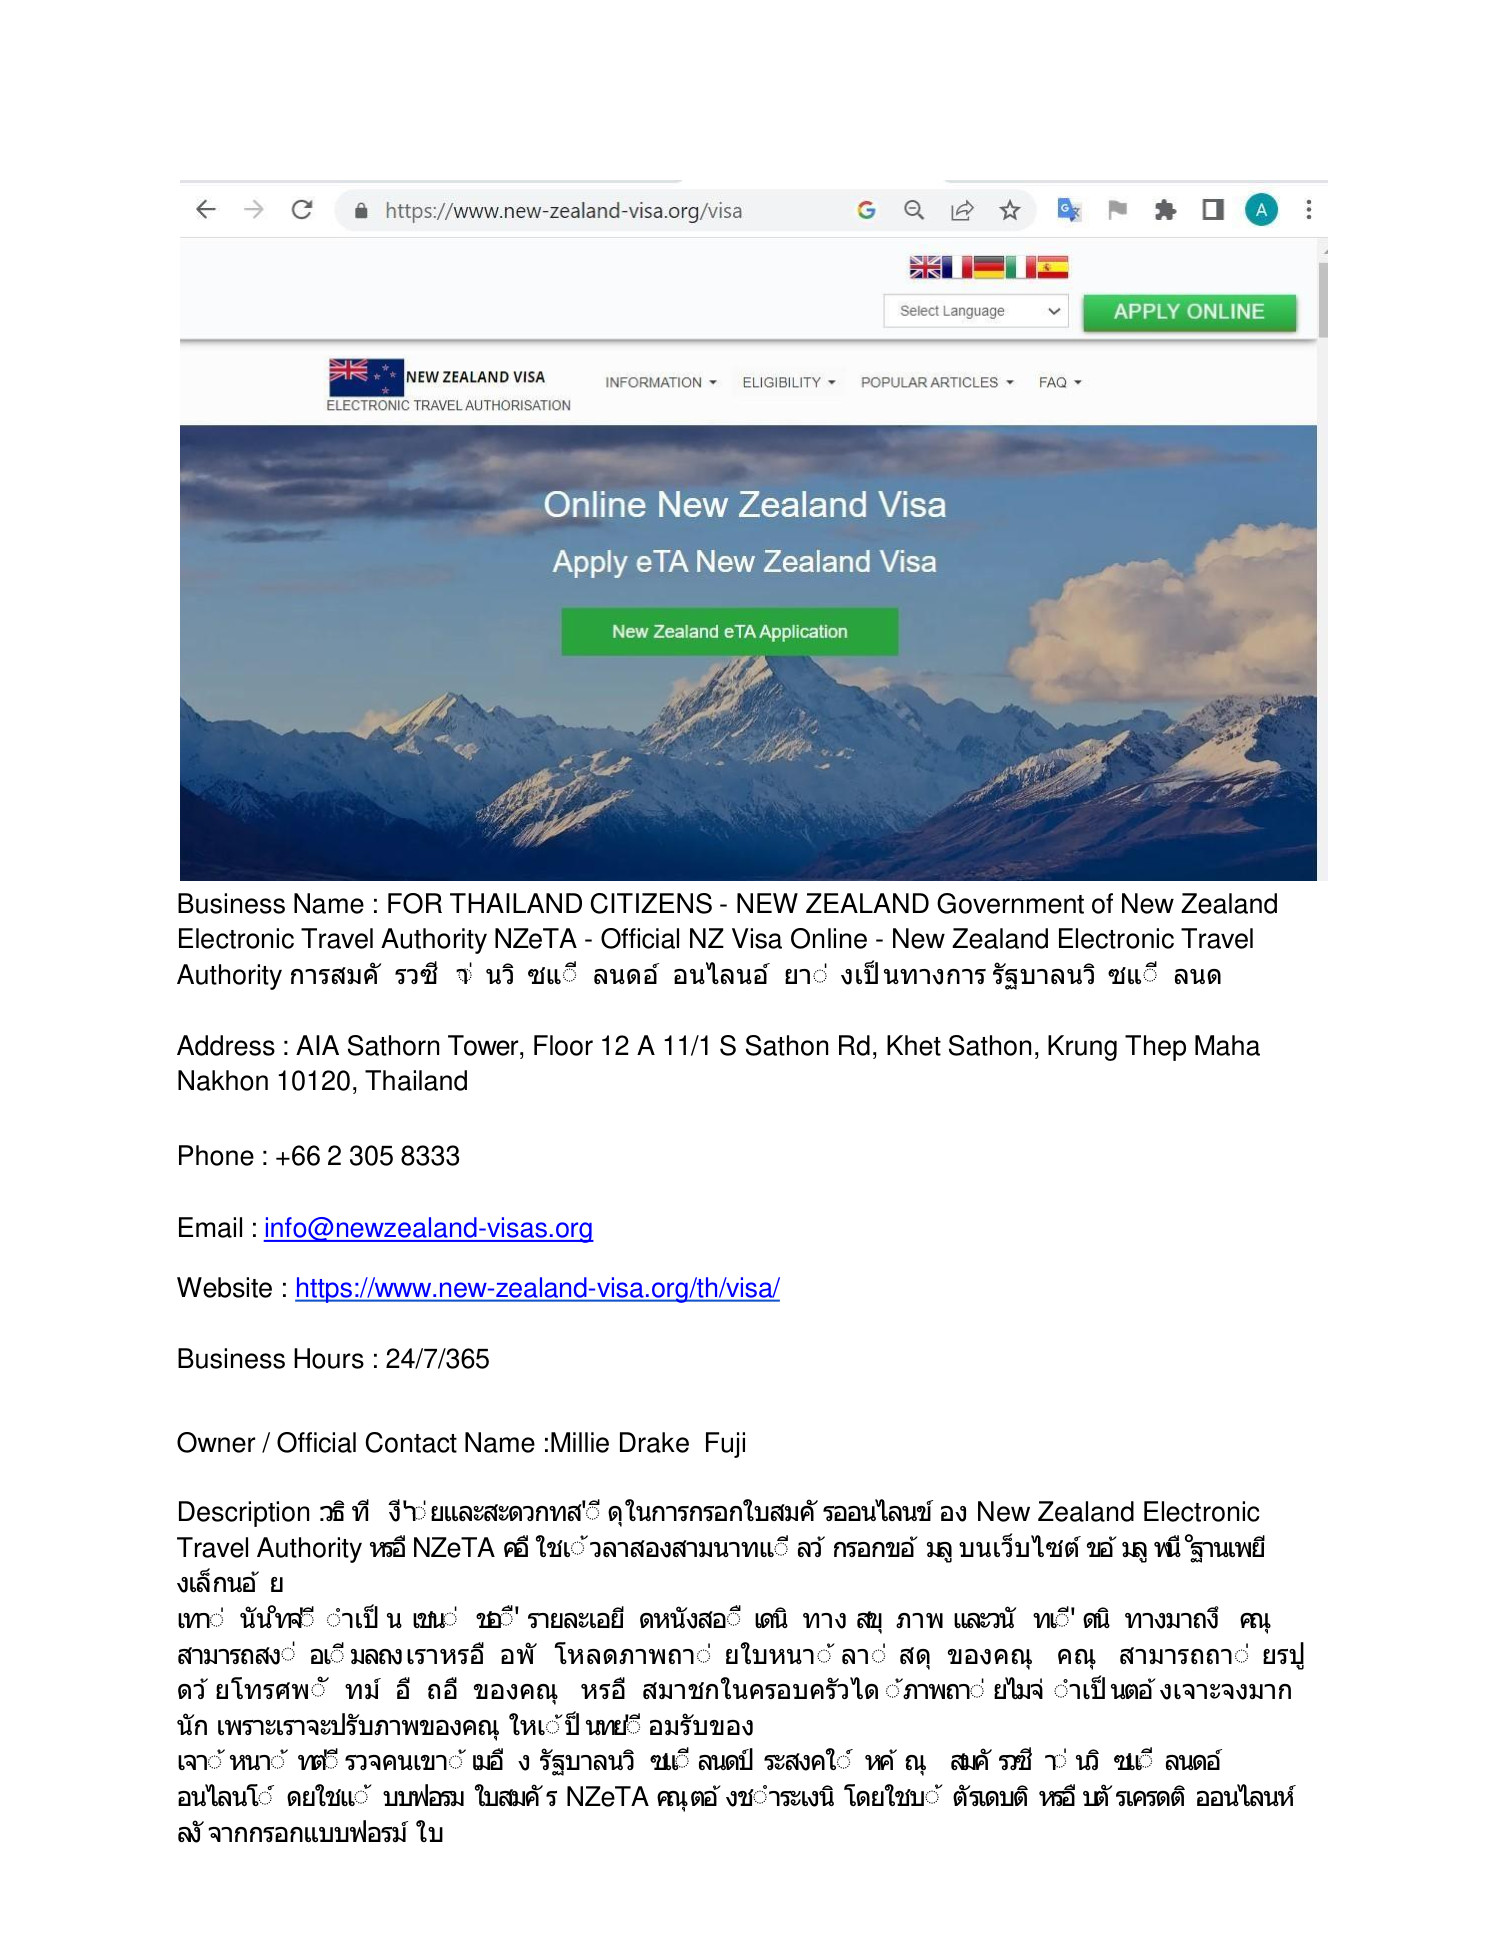 New Zealand Government Of New Zealand Electronic Travel Authority Nzetapptx Docdroid 3532